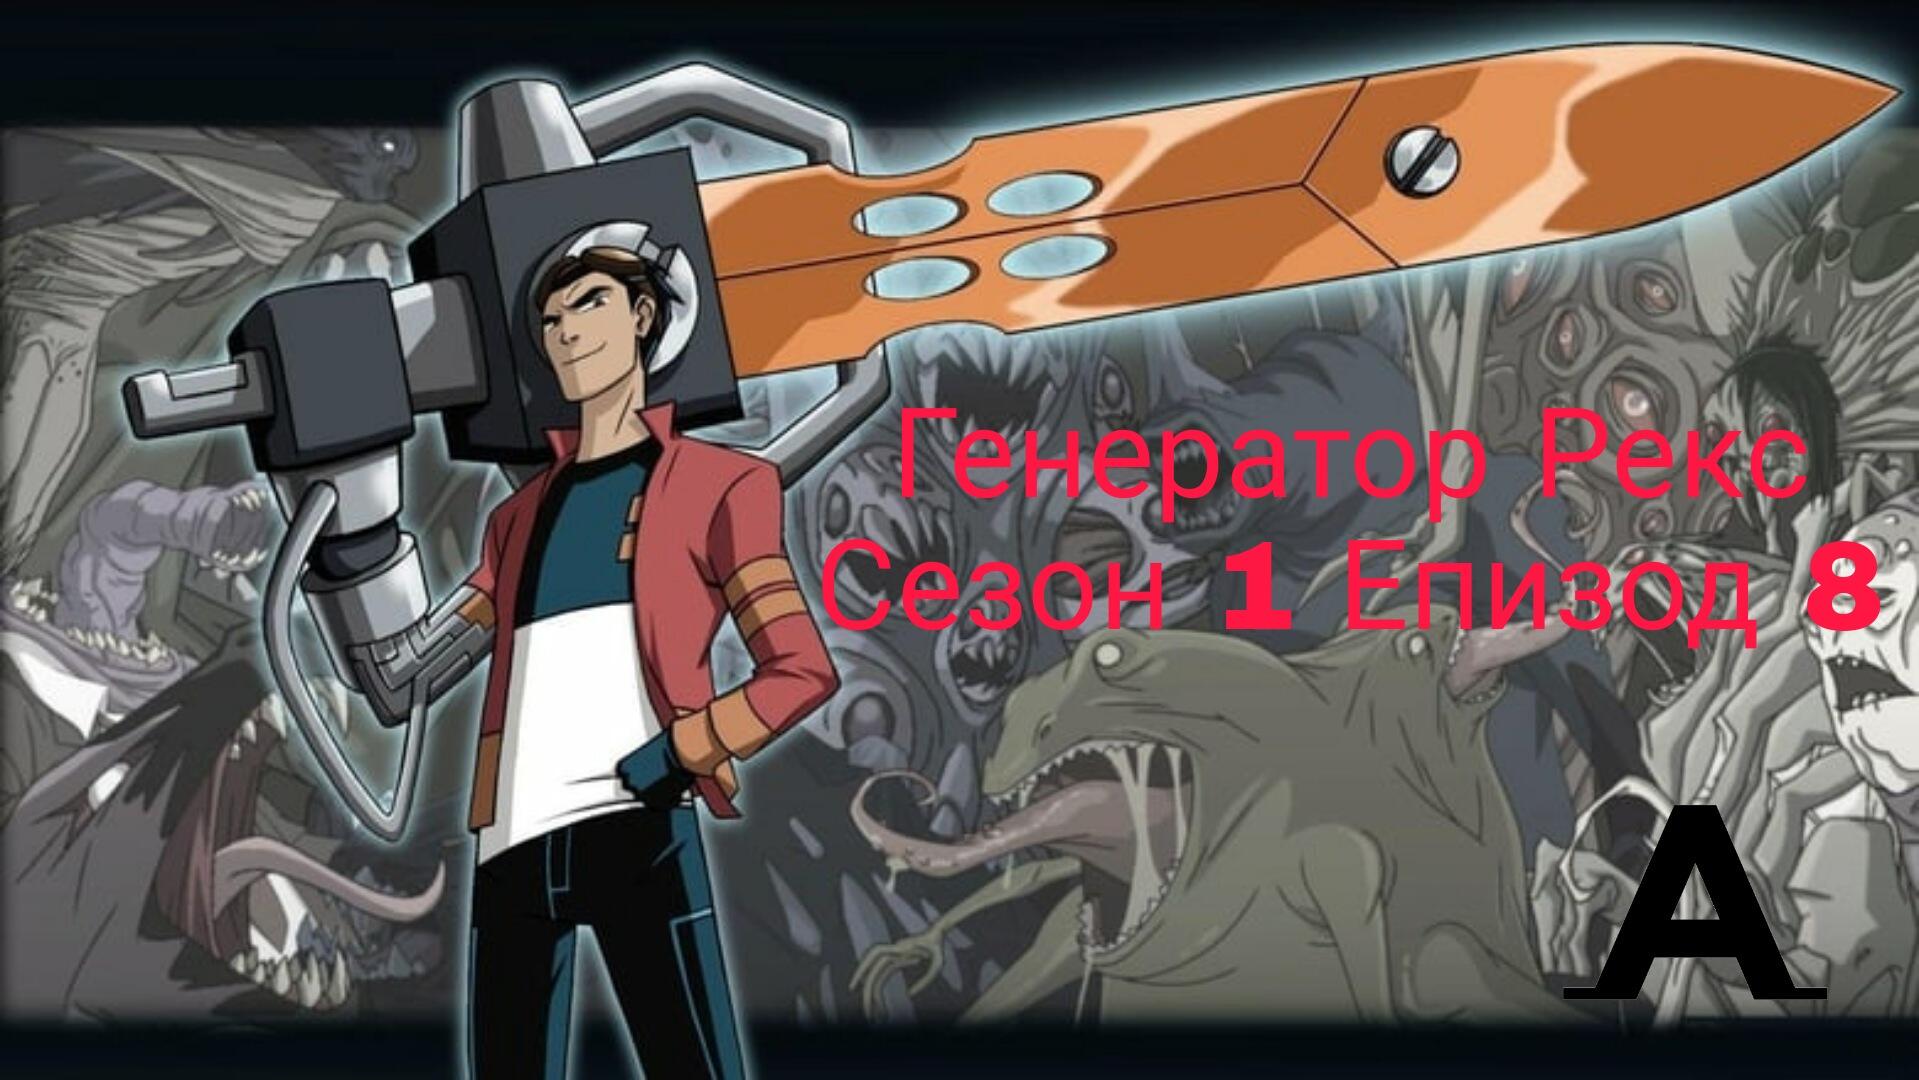 Generator Rex – Sezonul 1 Episodul 8 – Breșa - DozaAnimata